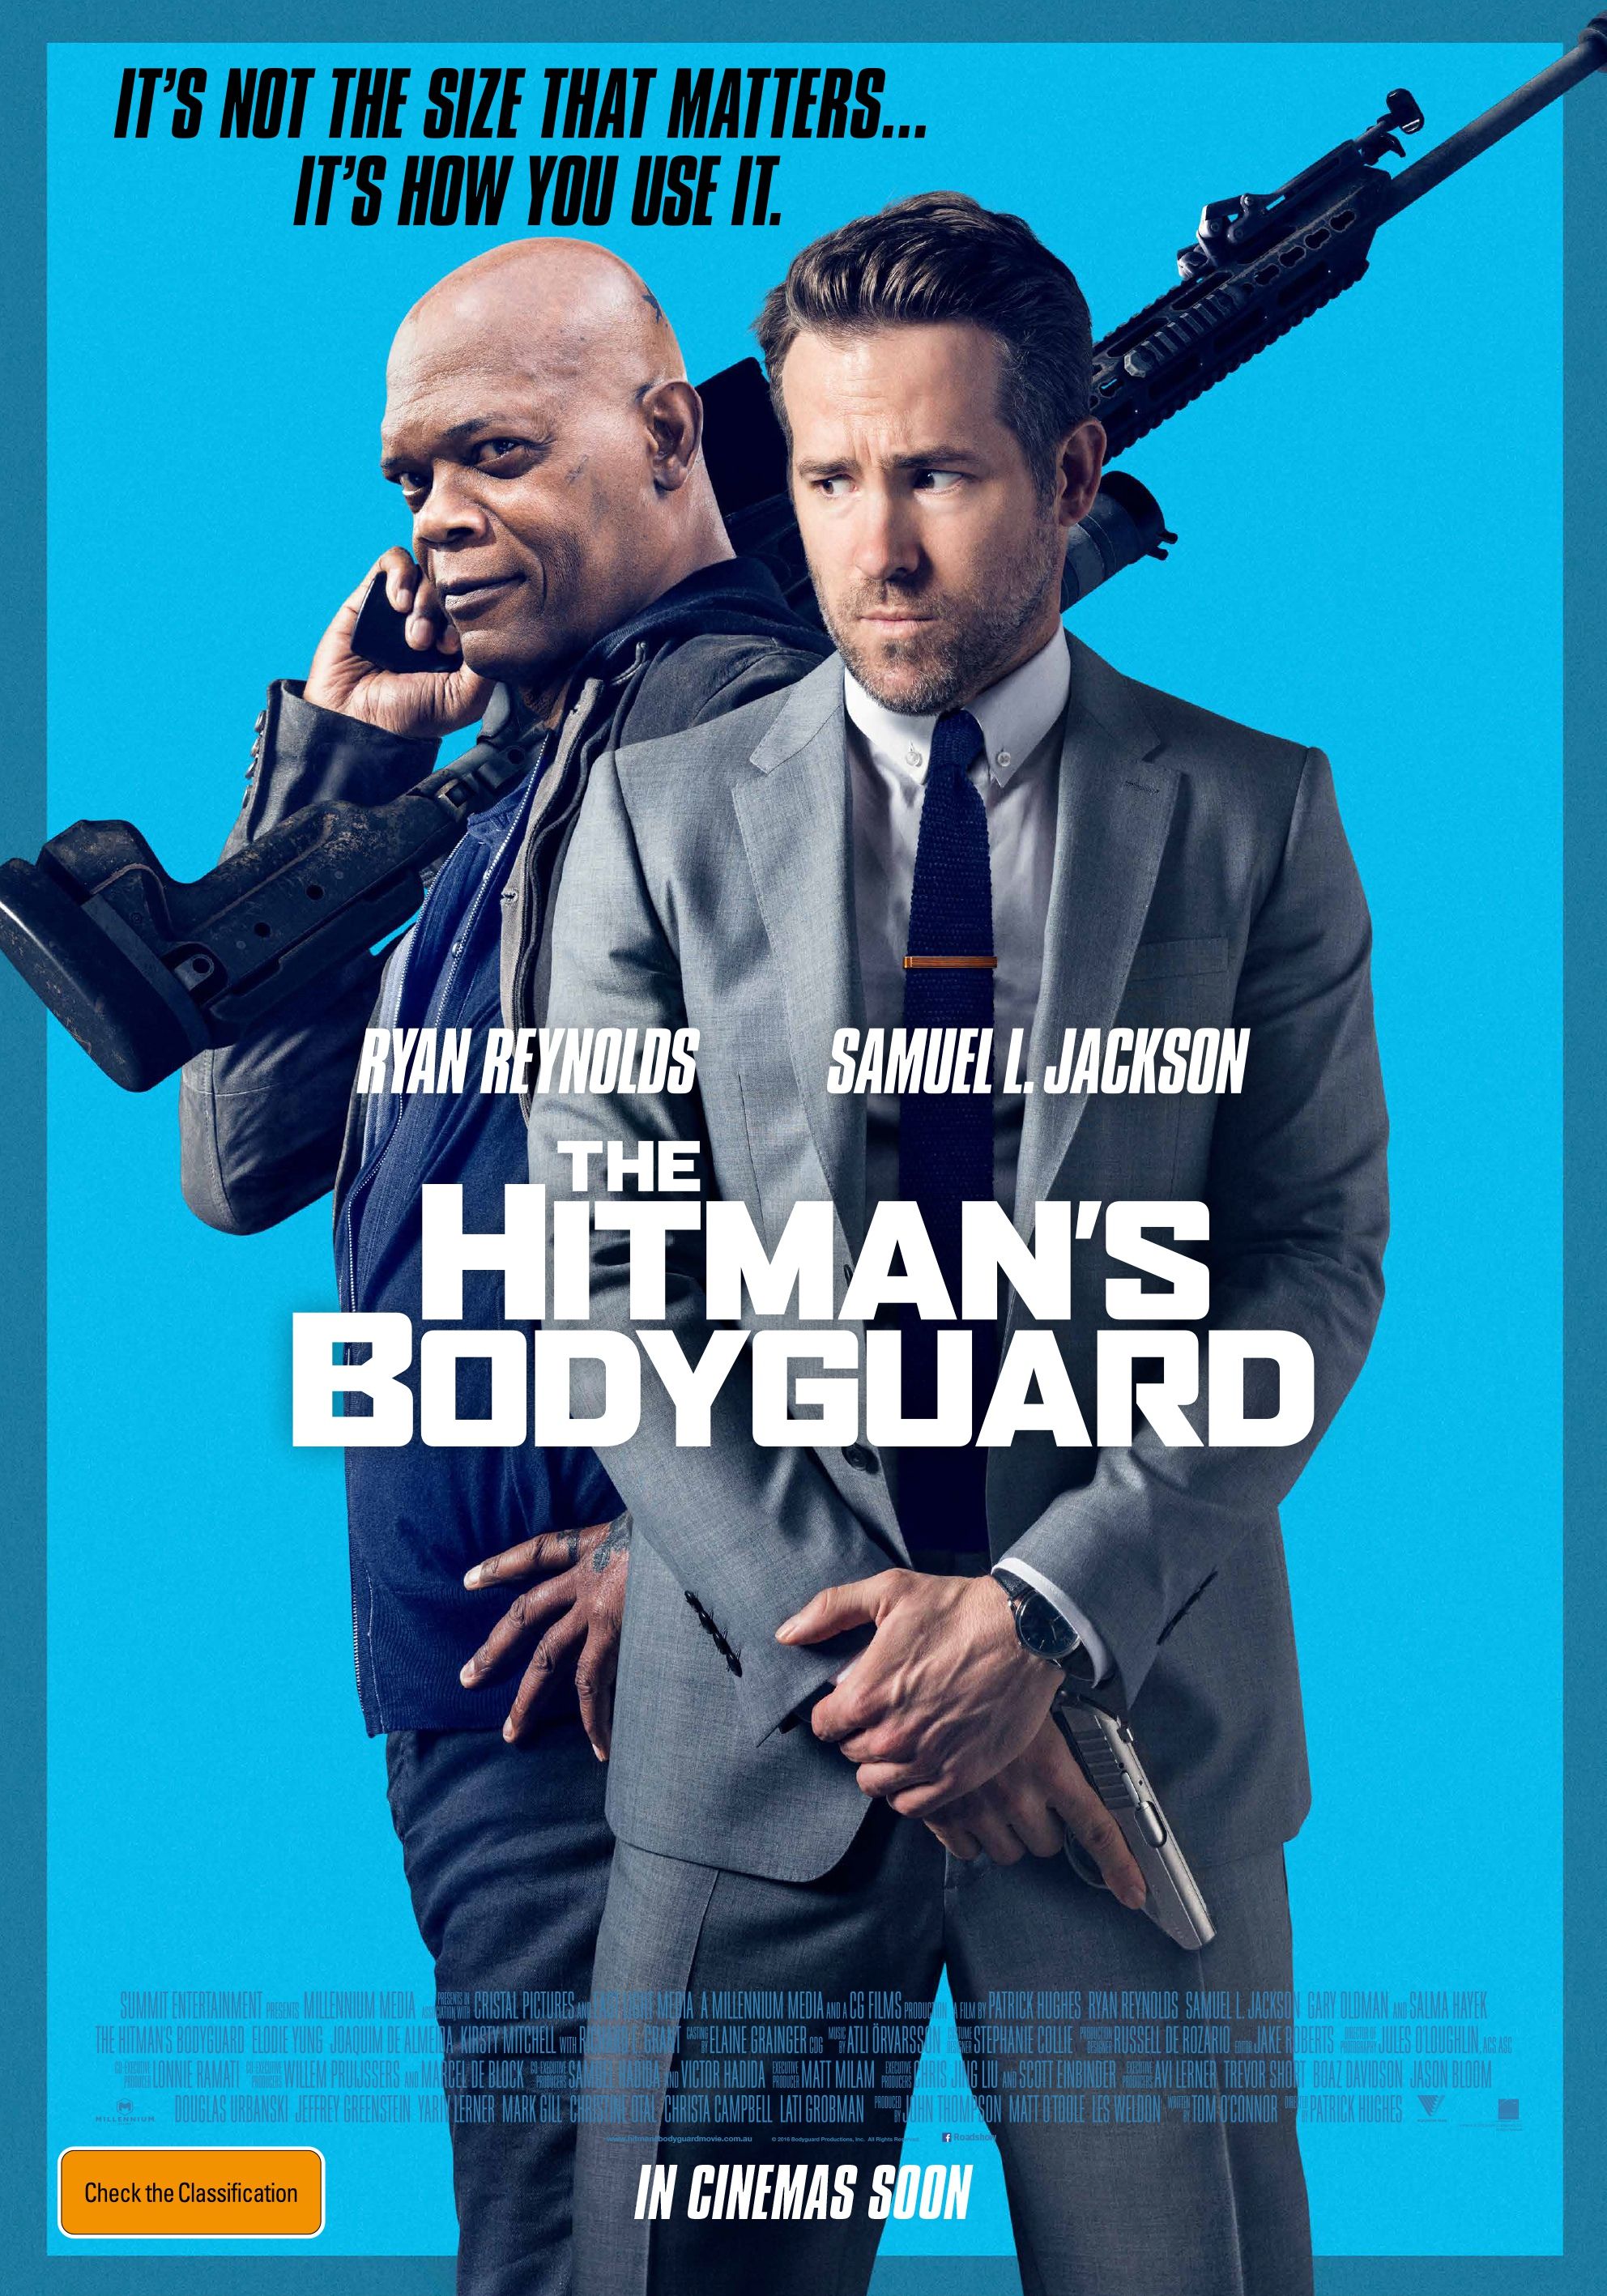 the hitmans bodyguard movie wallpaper